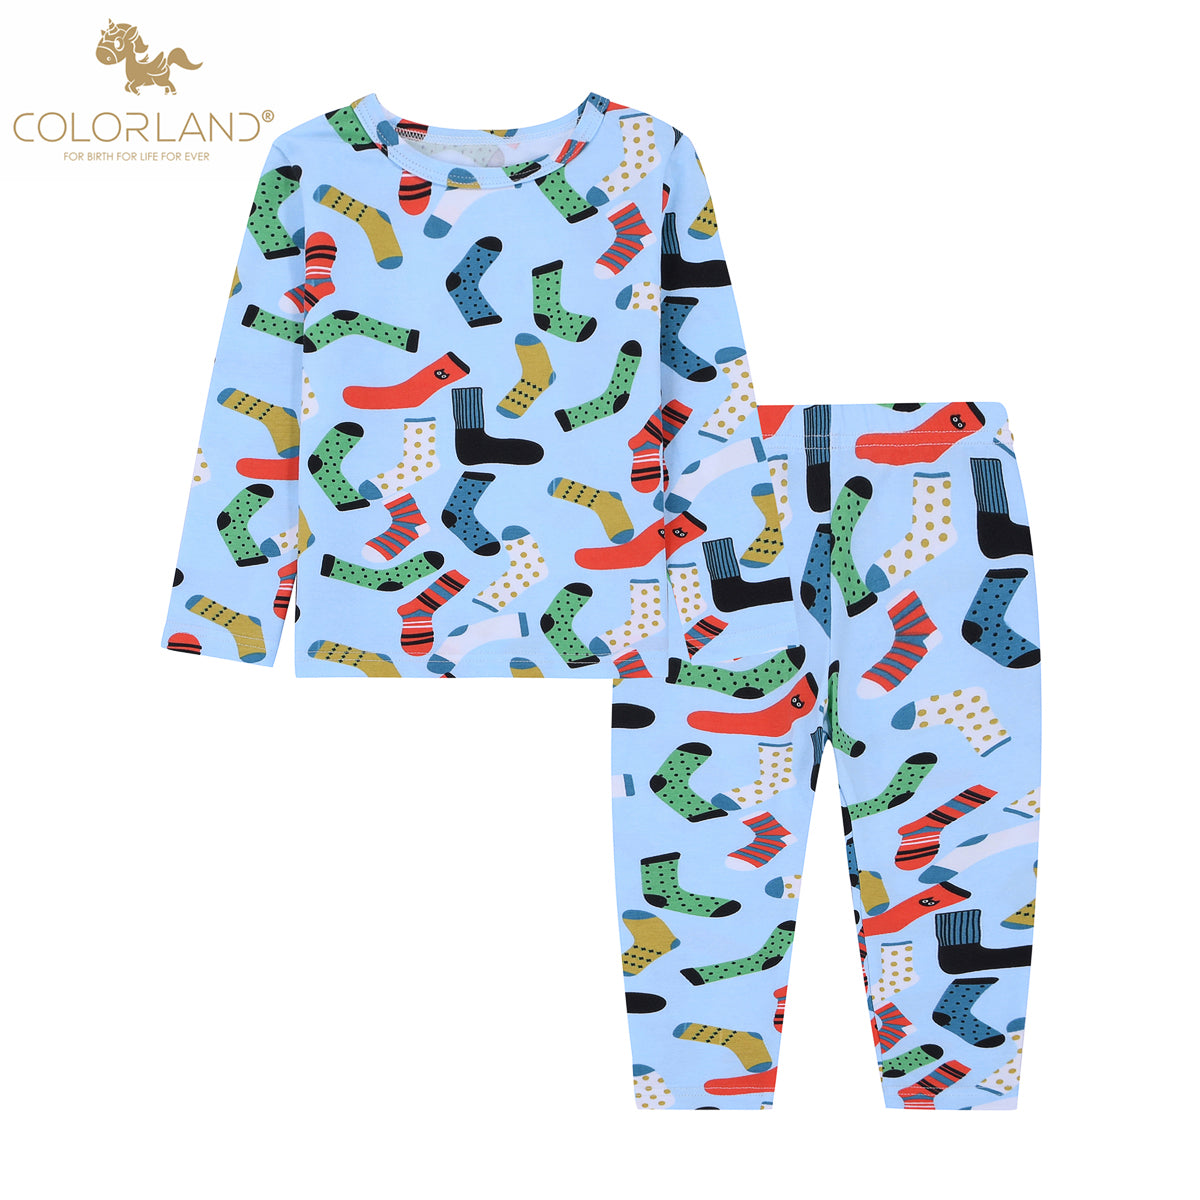 Colorland Kids love Snug Fitting Pyjamas long sleeve set